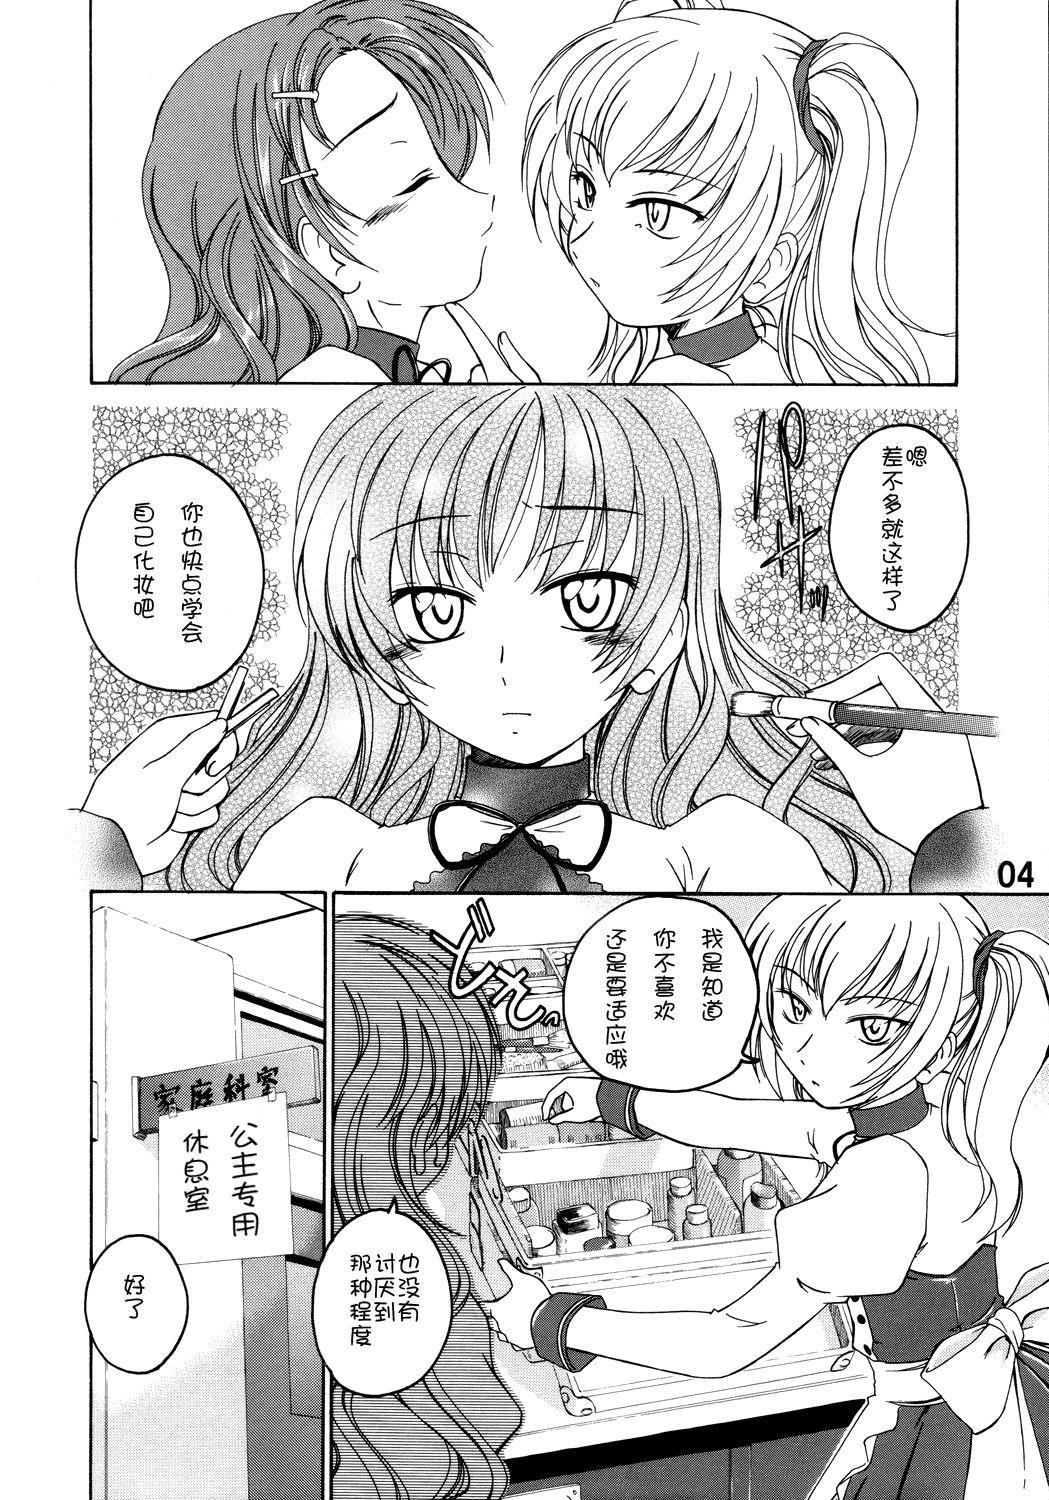 Gorgeous Manga Sangyou Haikibutsu 11 - Comic Industrial Wastes 11 - Princess princess Real Amateurs - Page 3